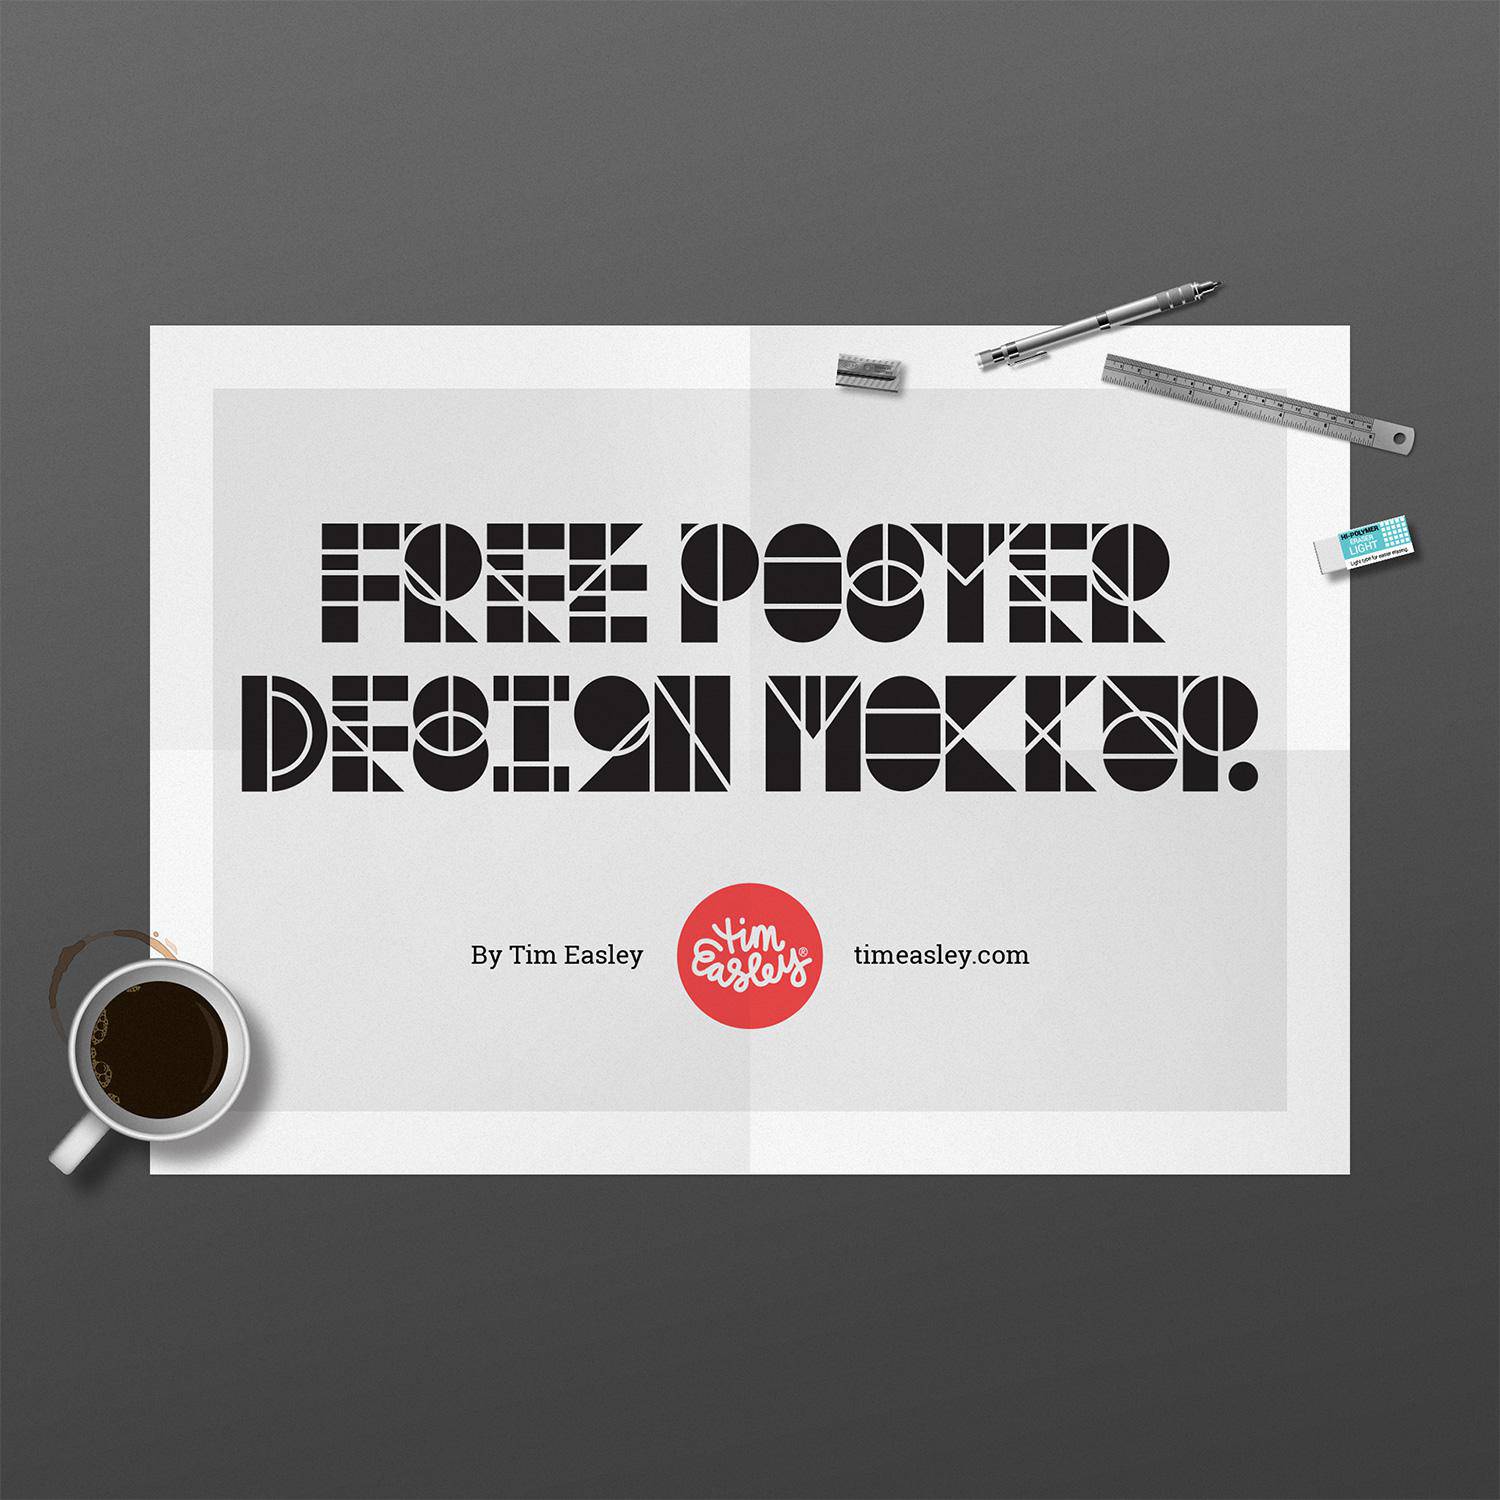 Free-Poster-Design-Mockup-3